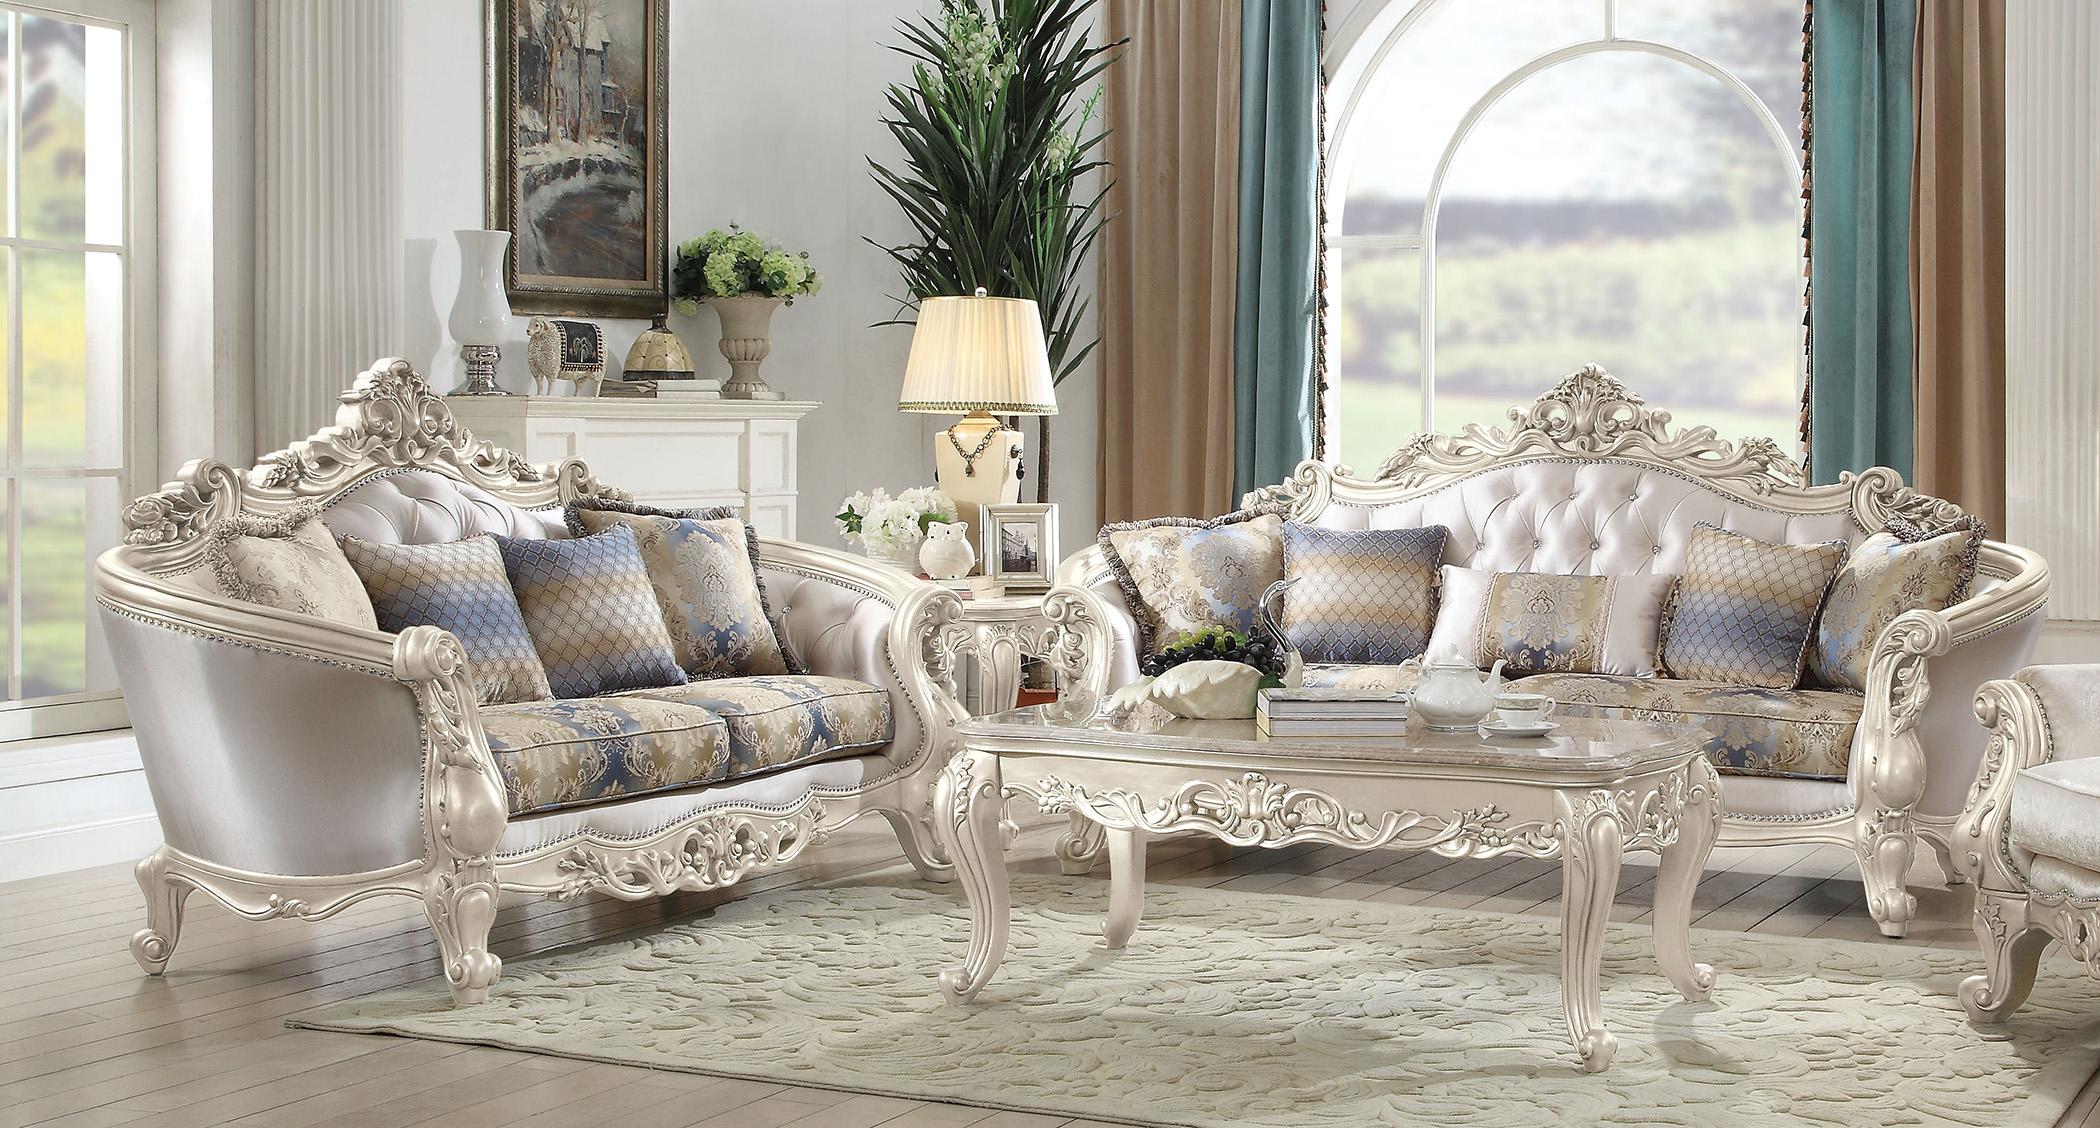 Classic, Traditional Sofa Loveseat Gorsedd-52440 Gorsedd-52440-Set-2 in Antique White, Cream Fabric